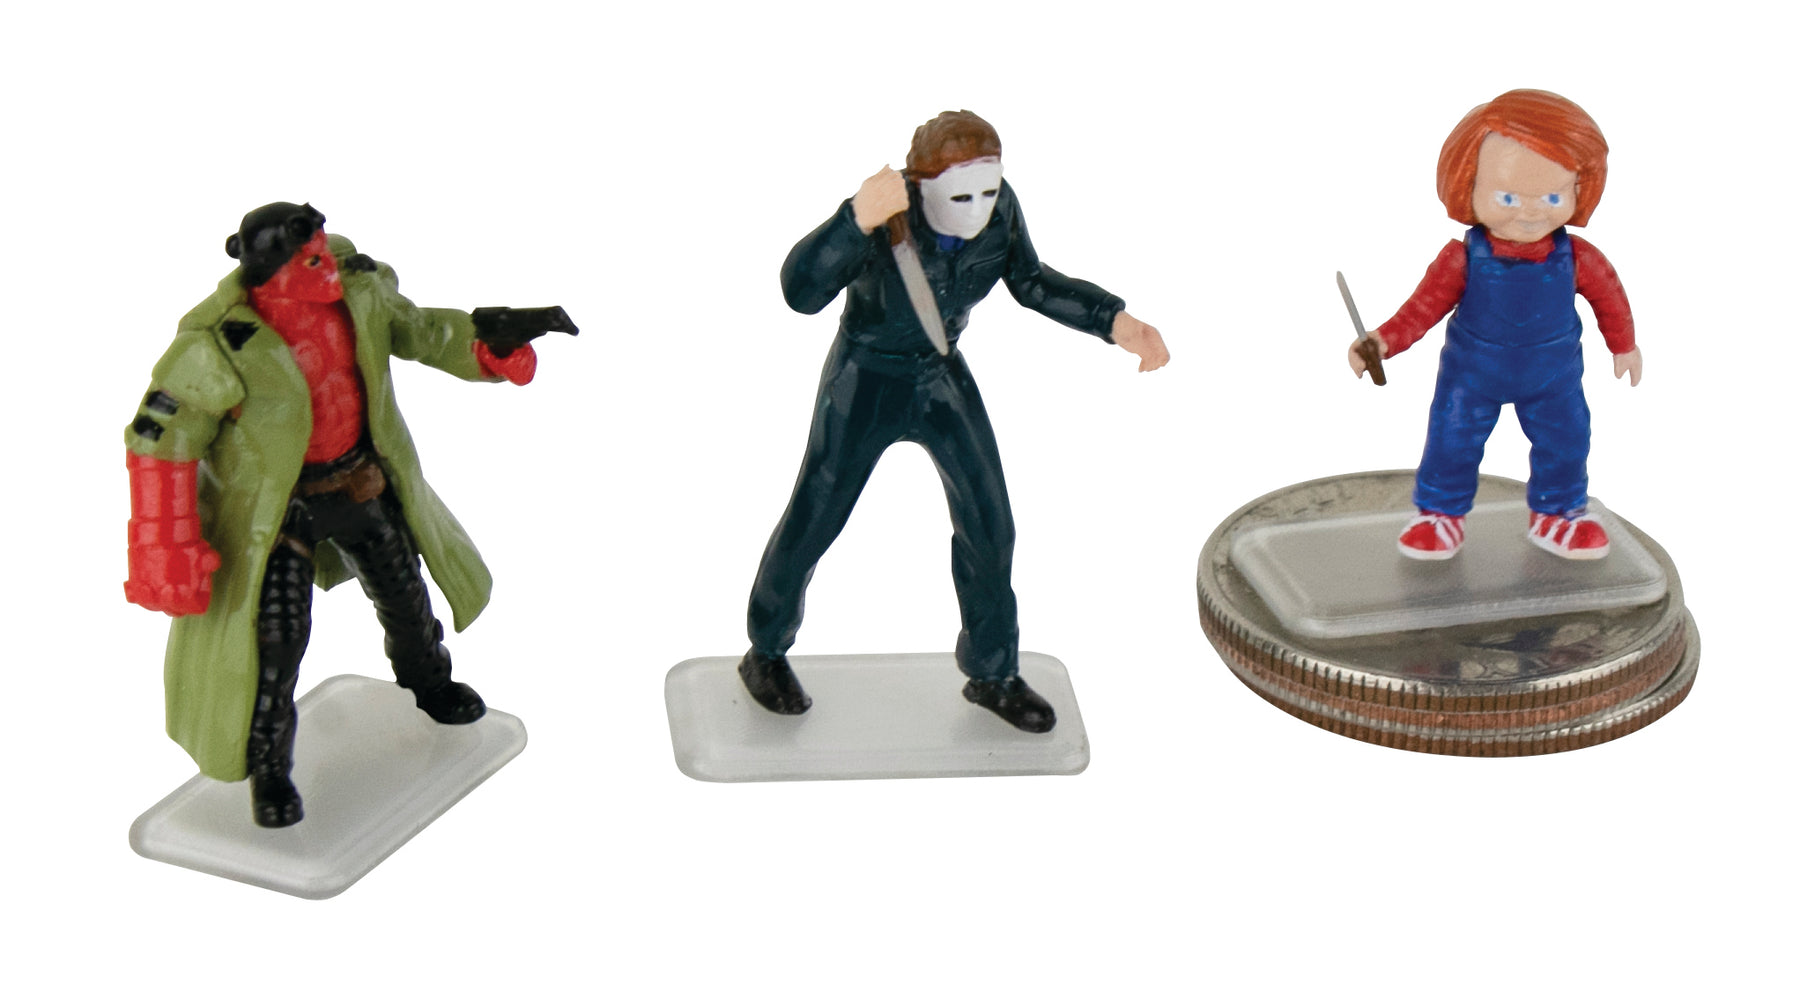 World's Smallest Universal Studios Horror Set of 3 Micro Action Figures